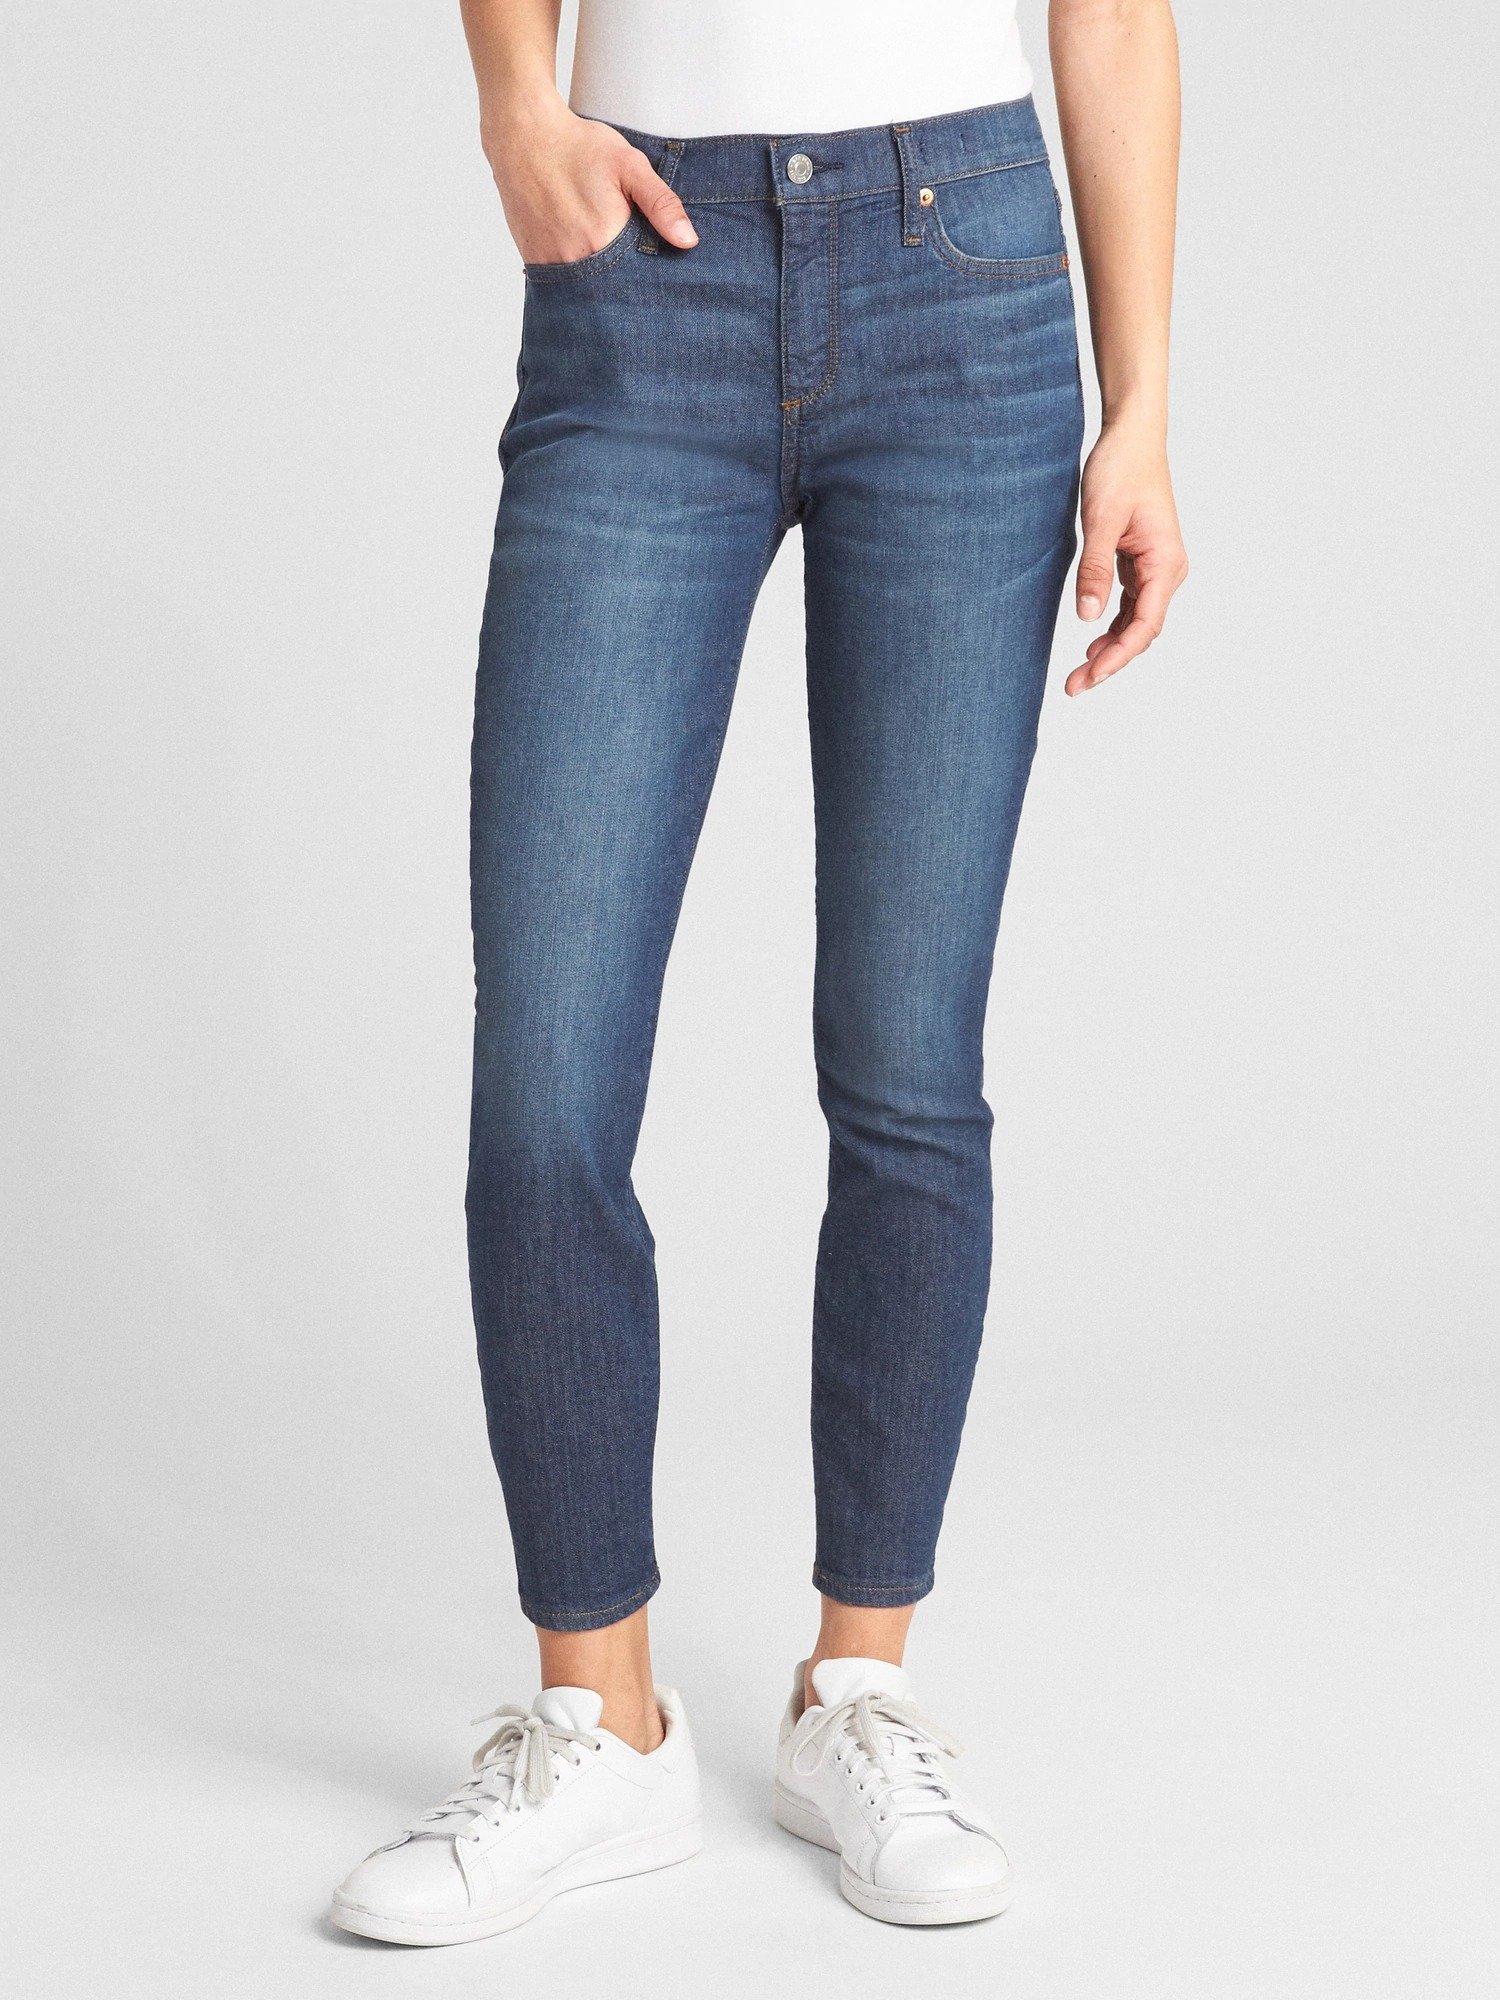 Wearlight Orta Belli True Skinny Jean Pantolon product image